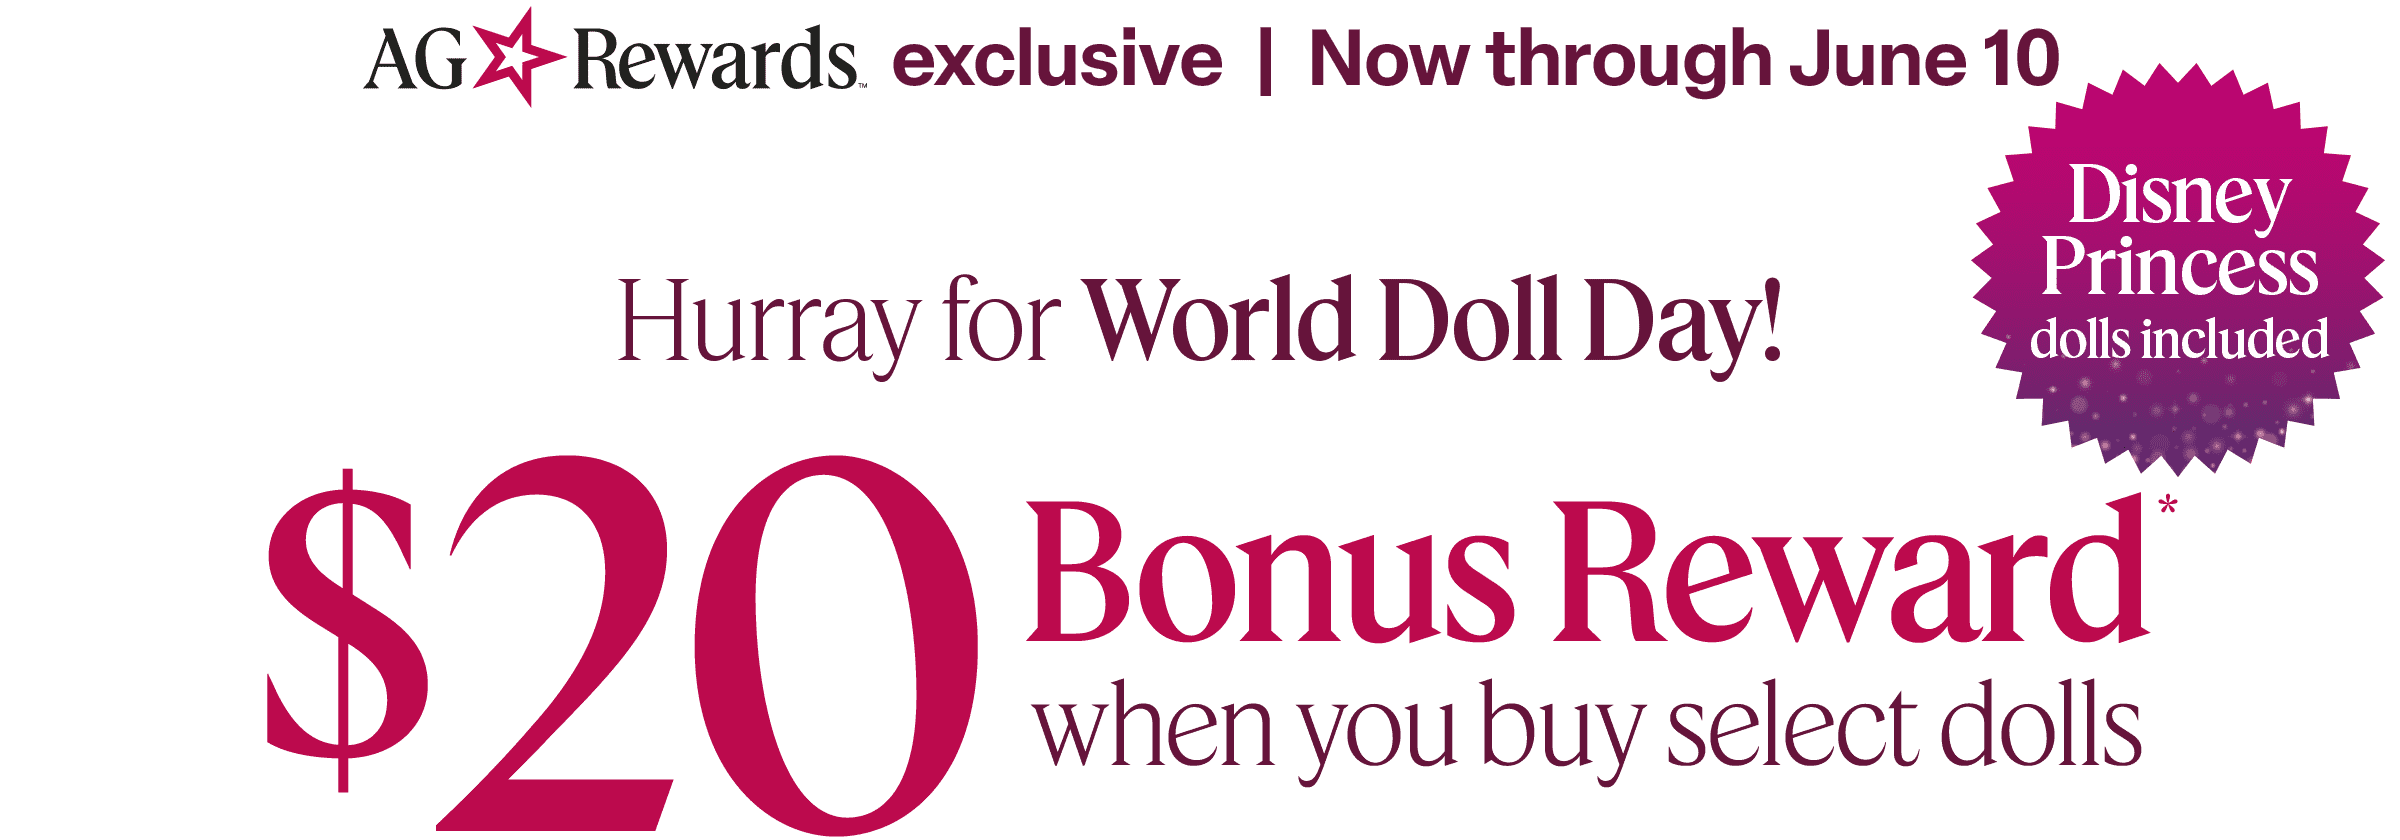 AG Rewards exclusive. Now through June 10. $20 bonus rewards when you buy select dolls. Disney Princess dolls included